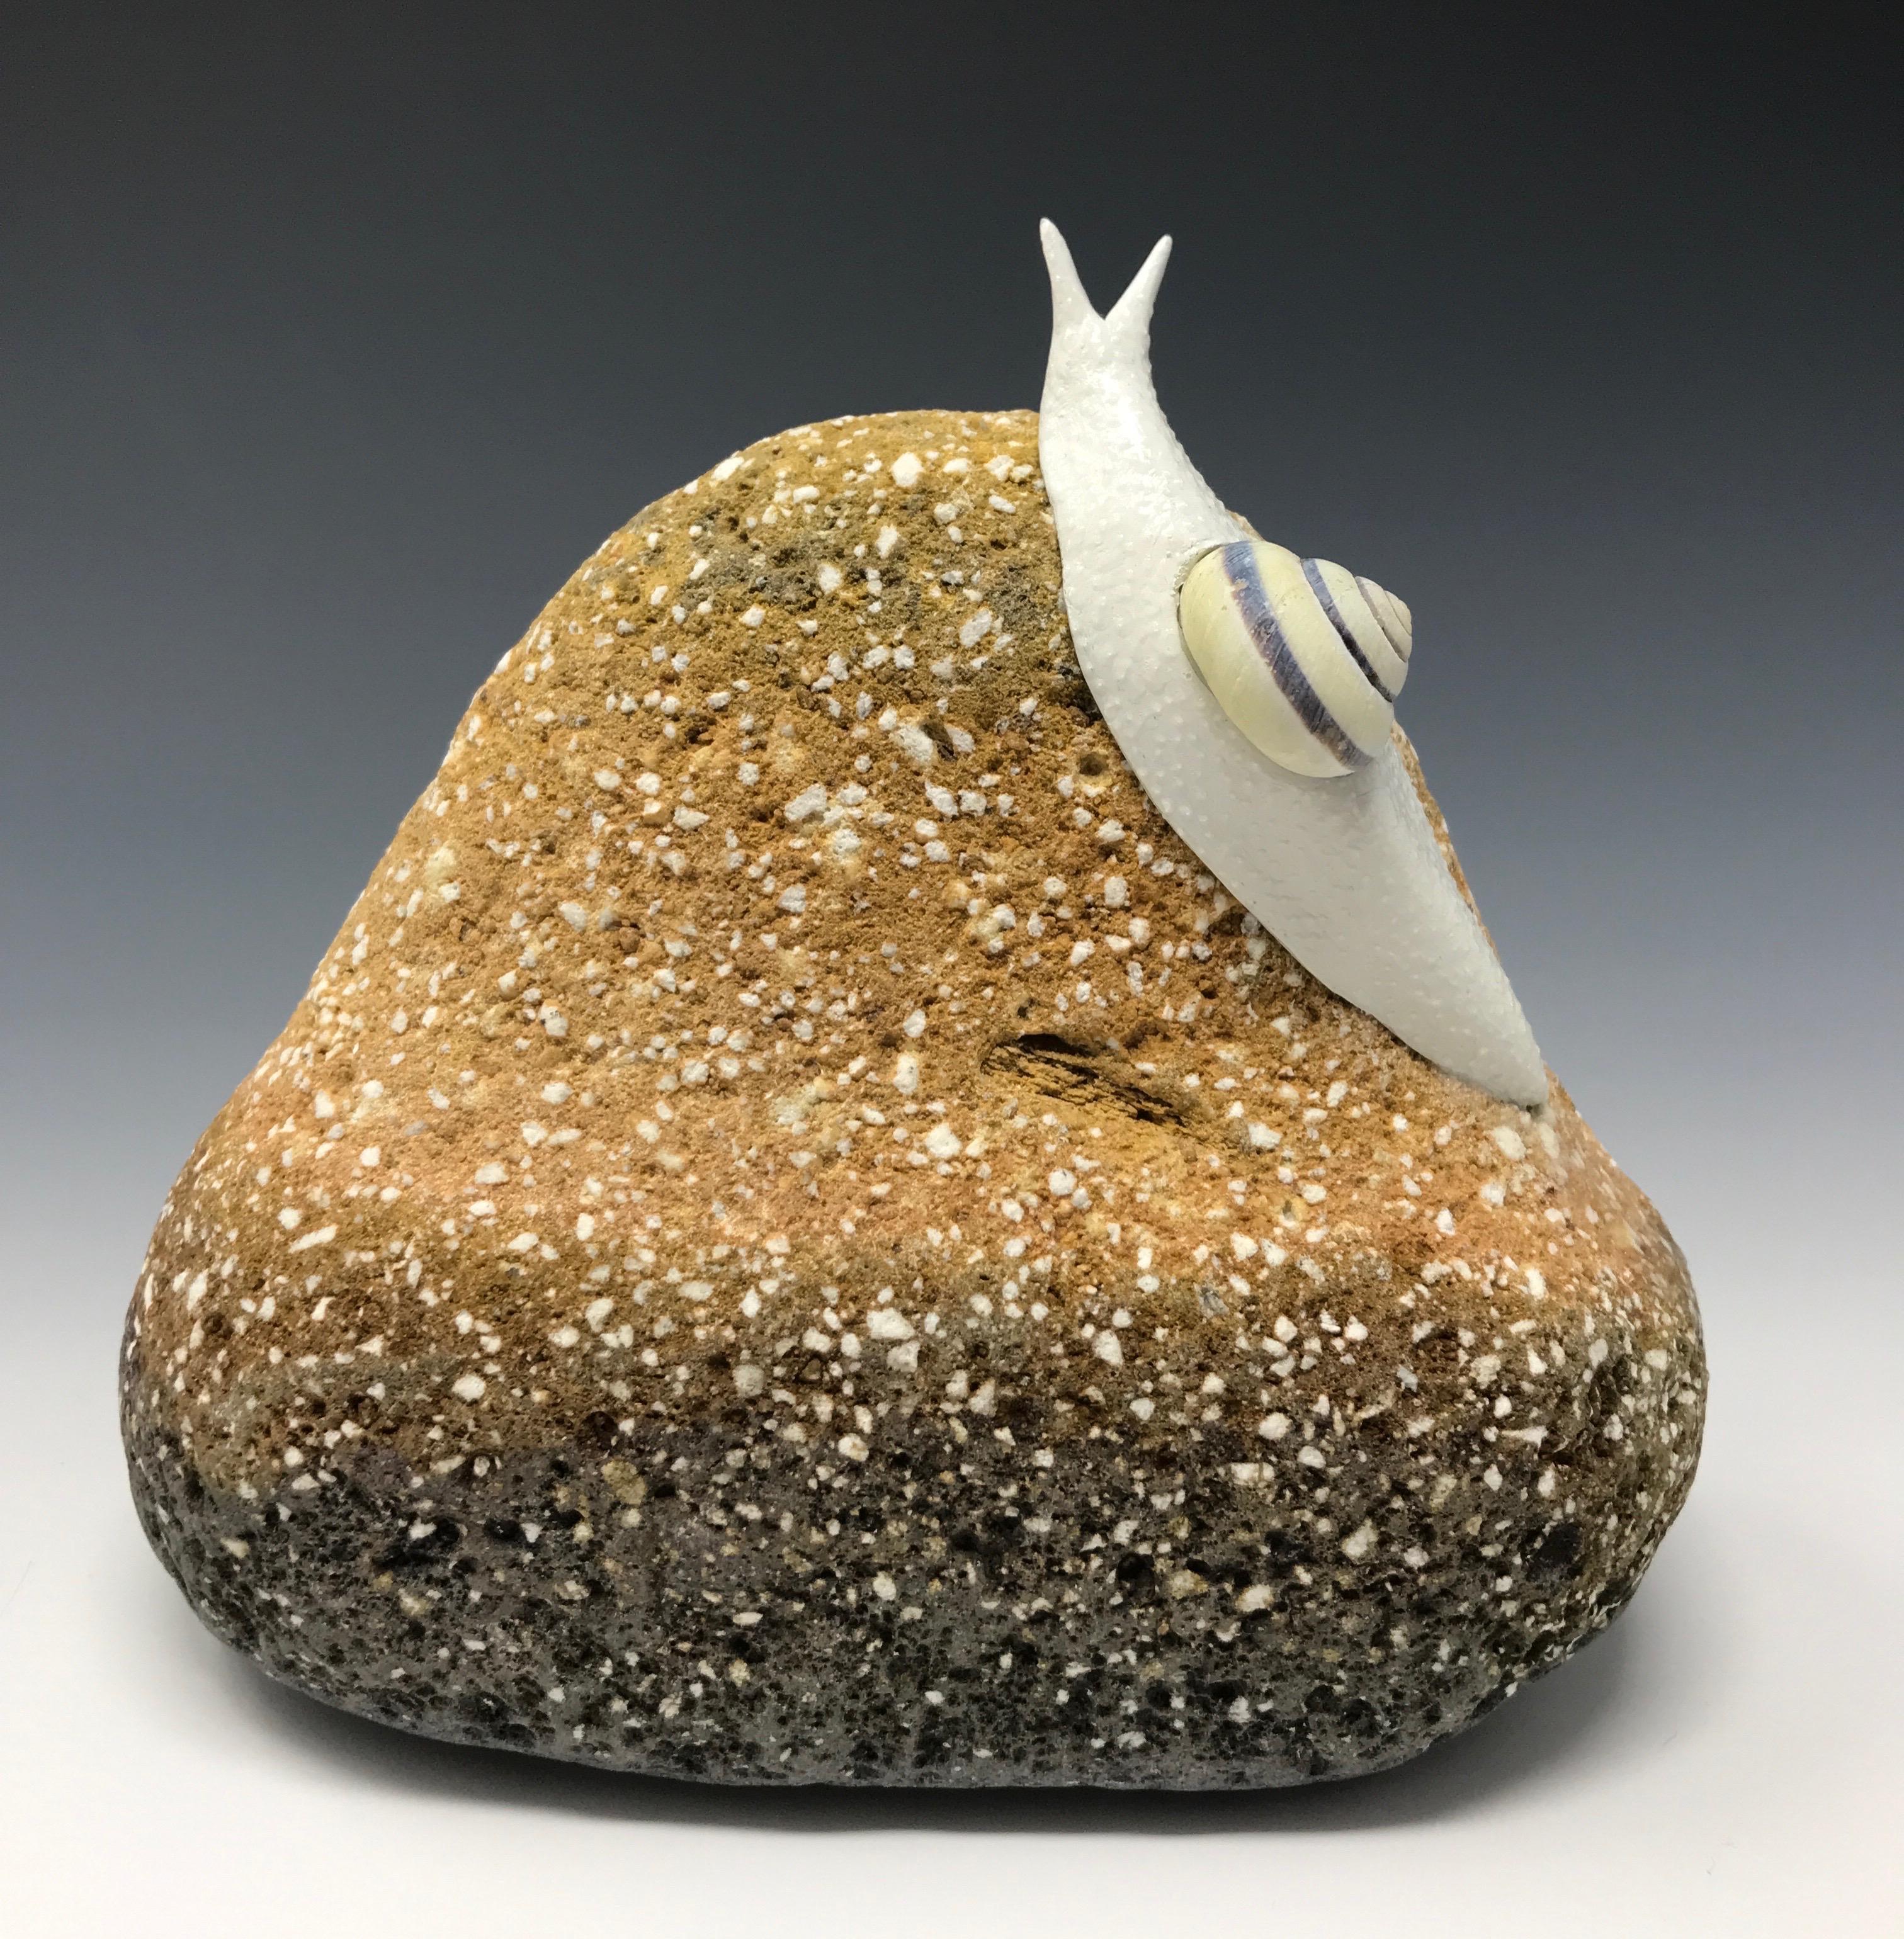 Snail study on a rock form "Traversing Weathered Brick” by Bethany Krull